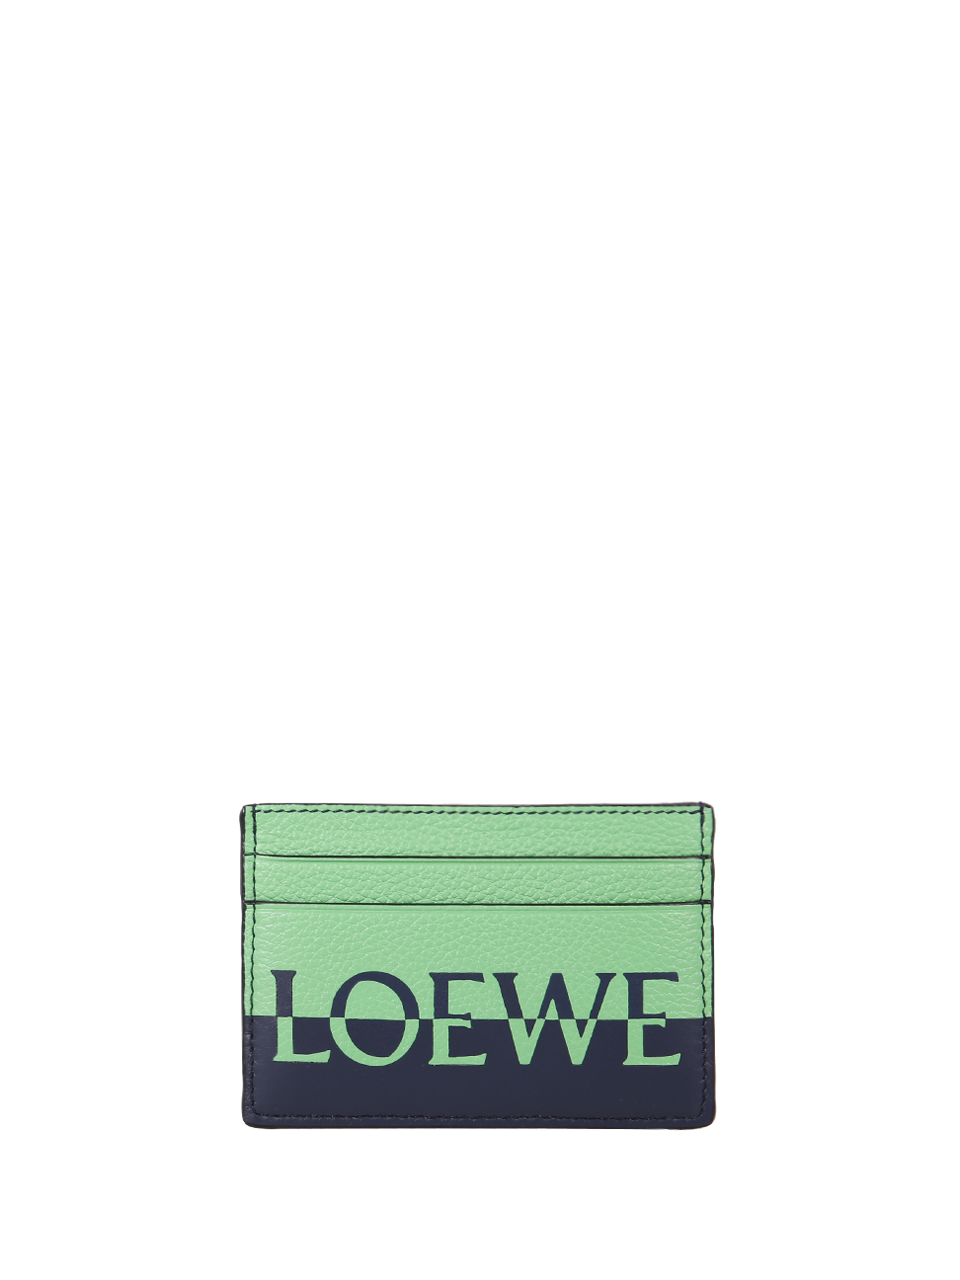 Loewe 男士拼色卡夹 C314322x01-5827